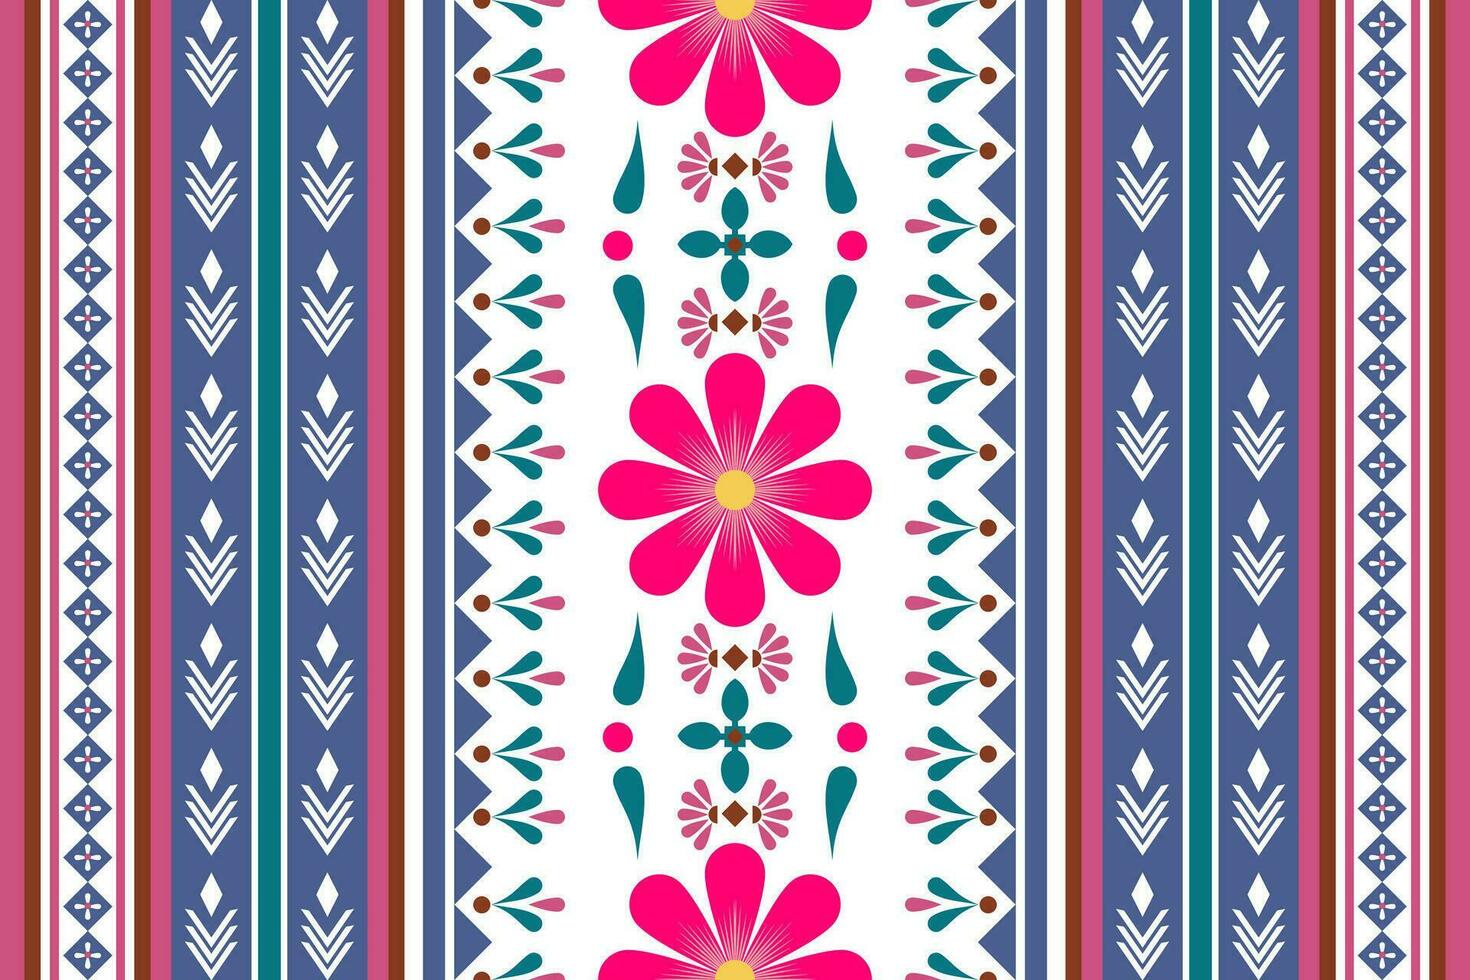 Blumen- Muster Hintergrund, Keramik Fliese Muster, Vektor Muster, süß Illustration, Fliese Design, wickeln, abstrakt